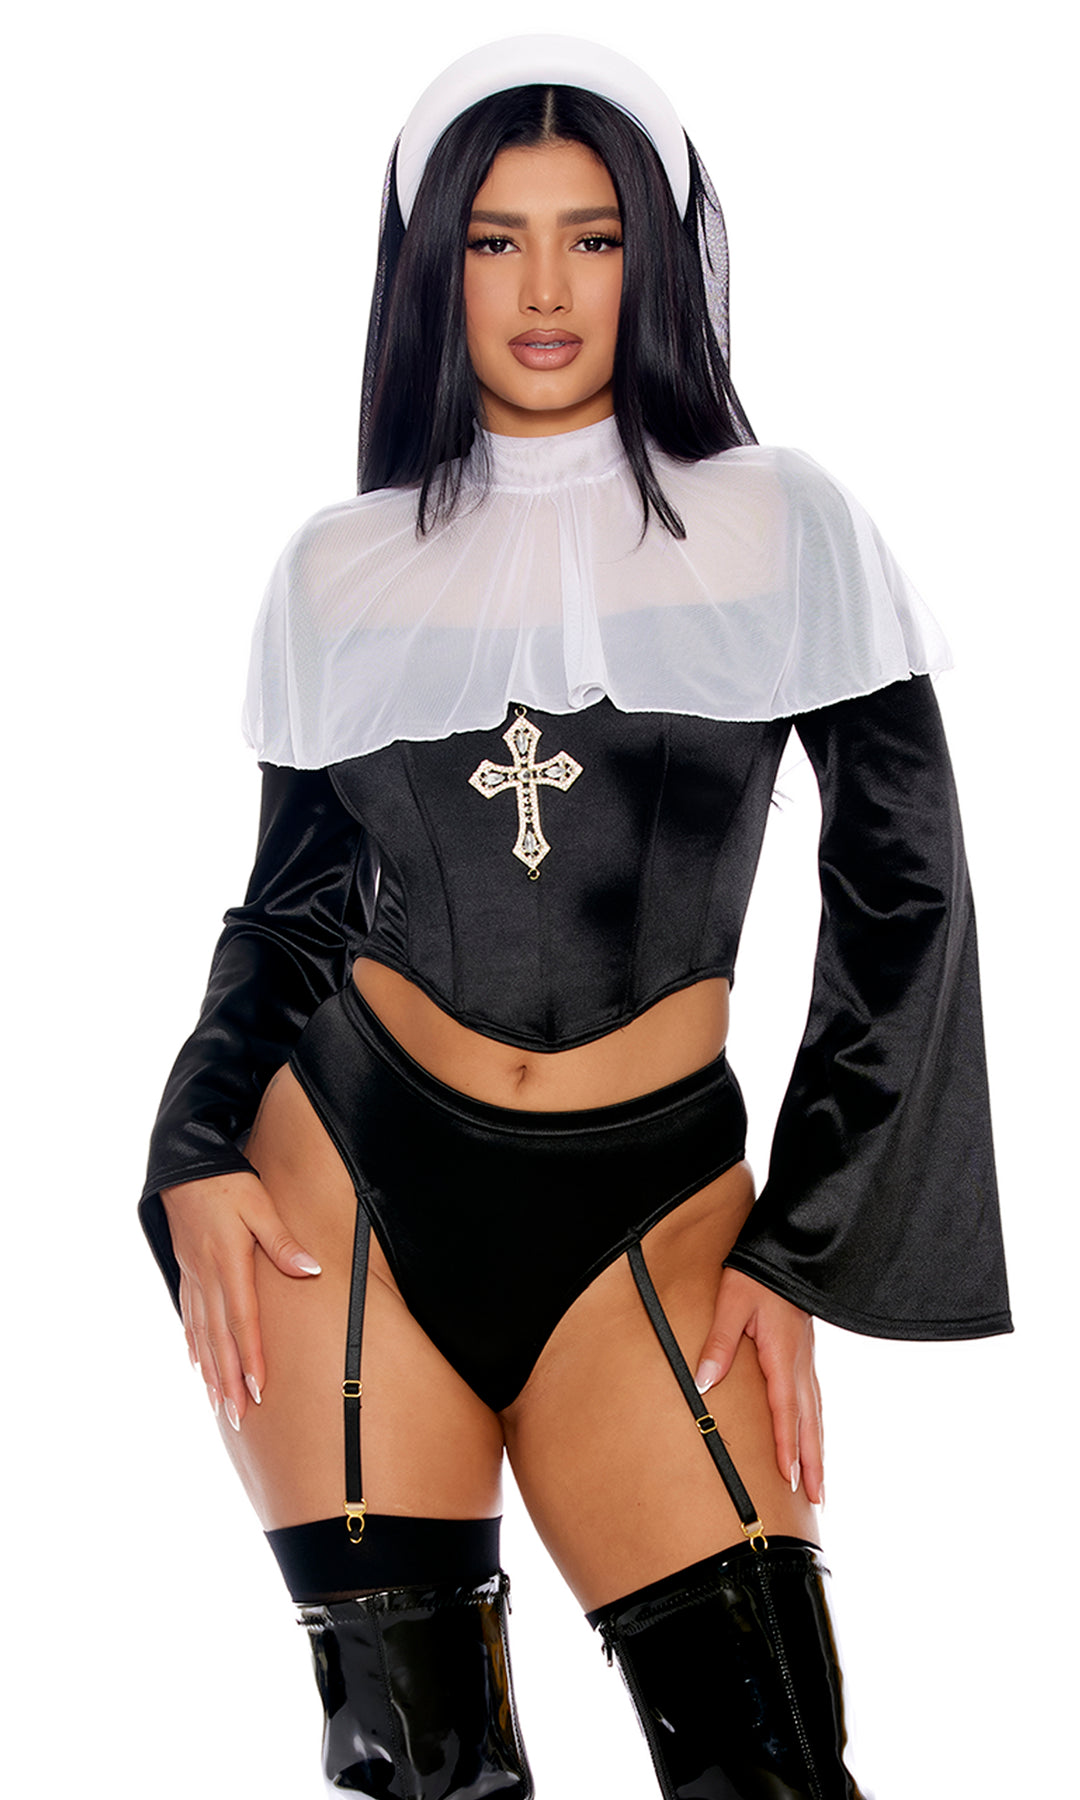 Best Behavior Sexy Nun Costume